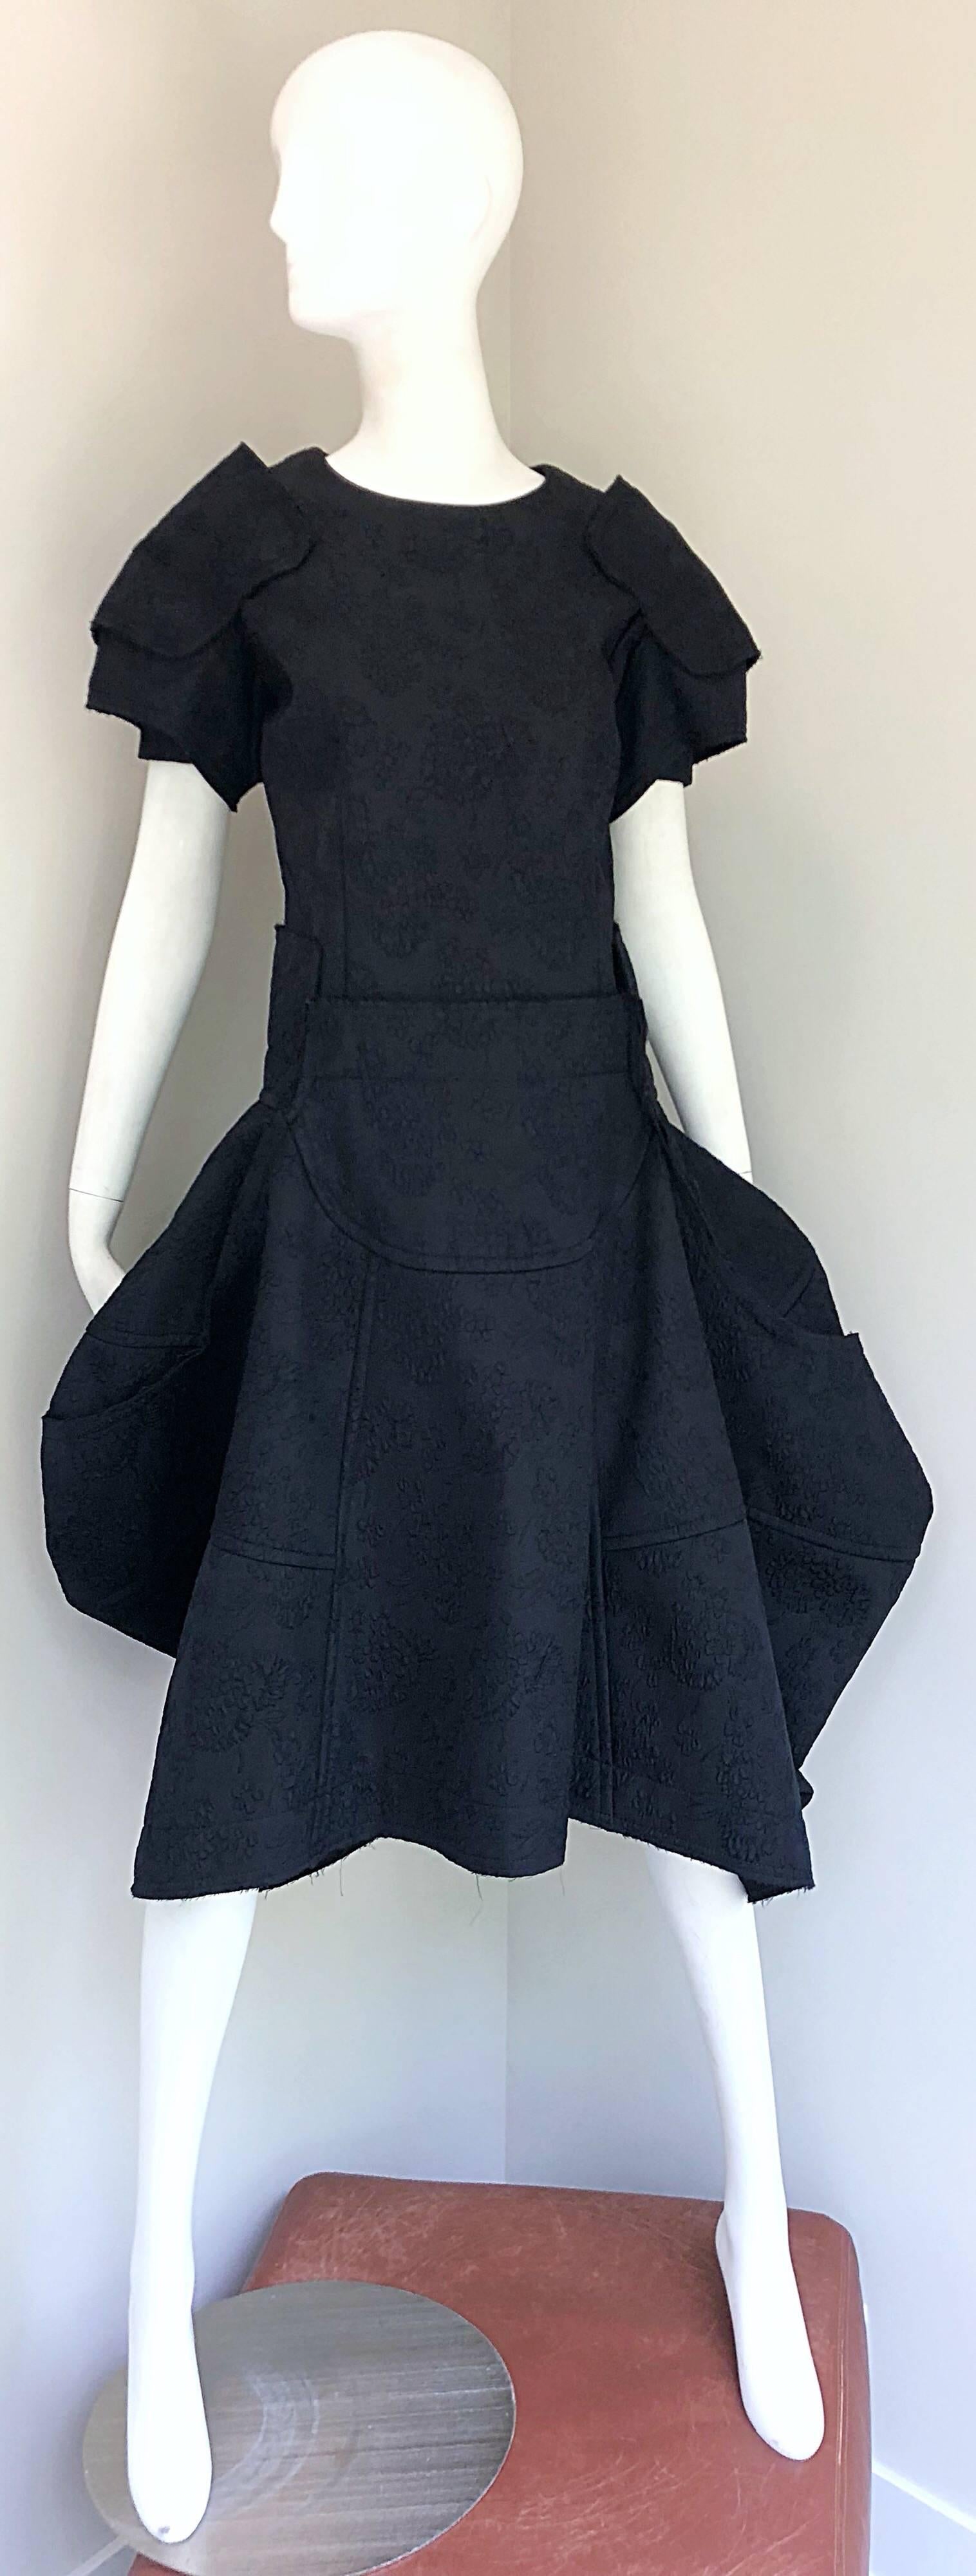 Comme Des Garcons Samurai 2016 Collection Black Avant Garde Collectible Dress 12